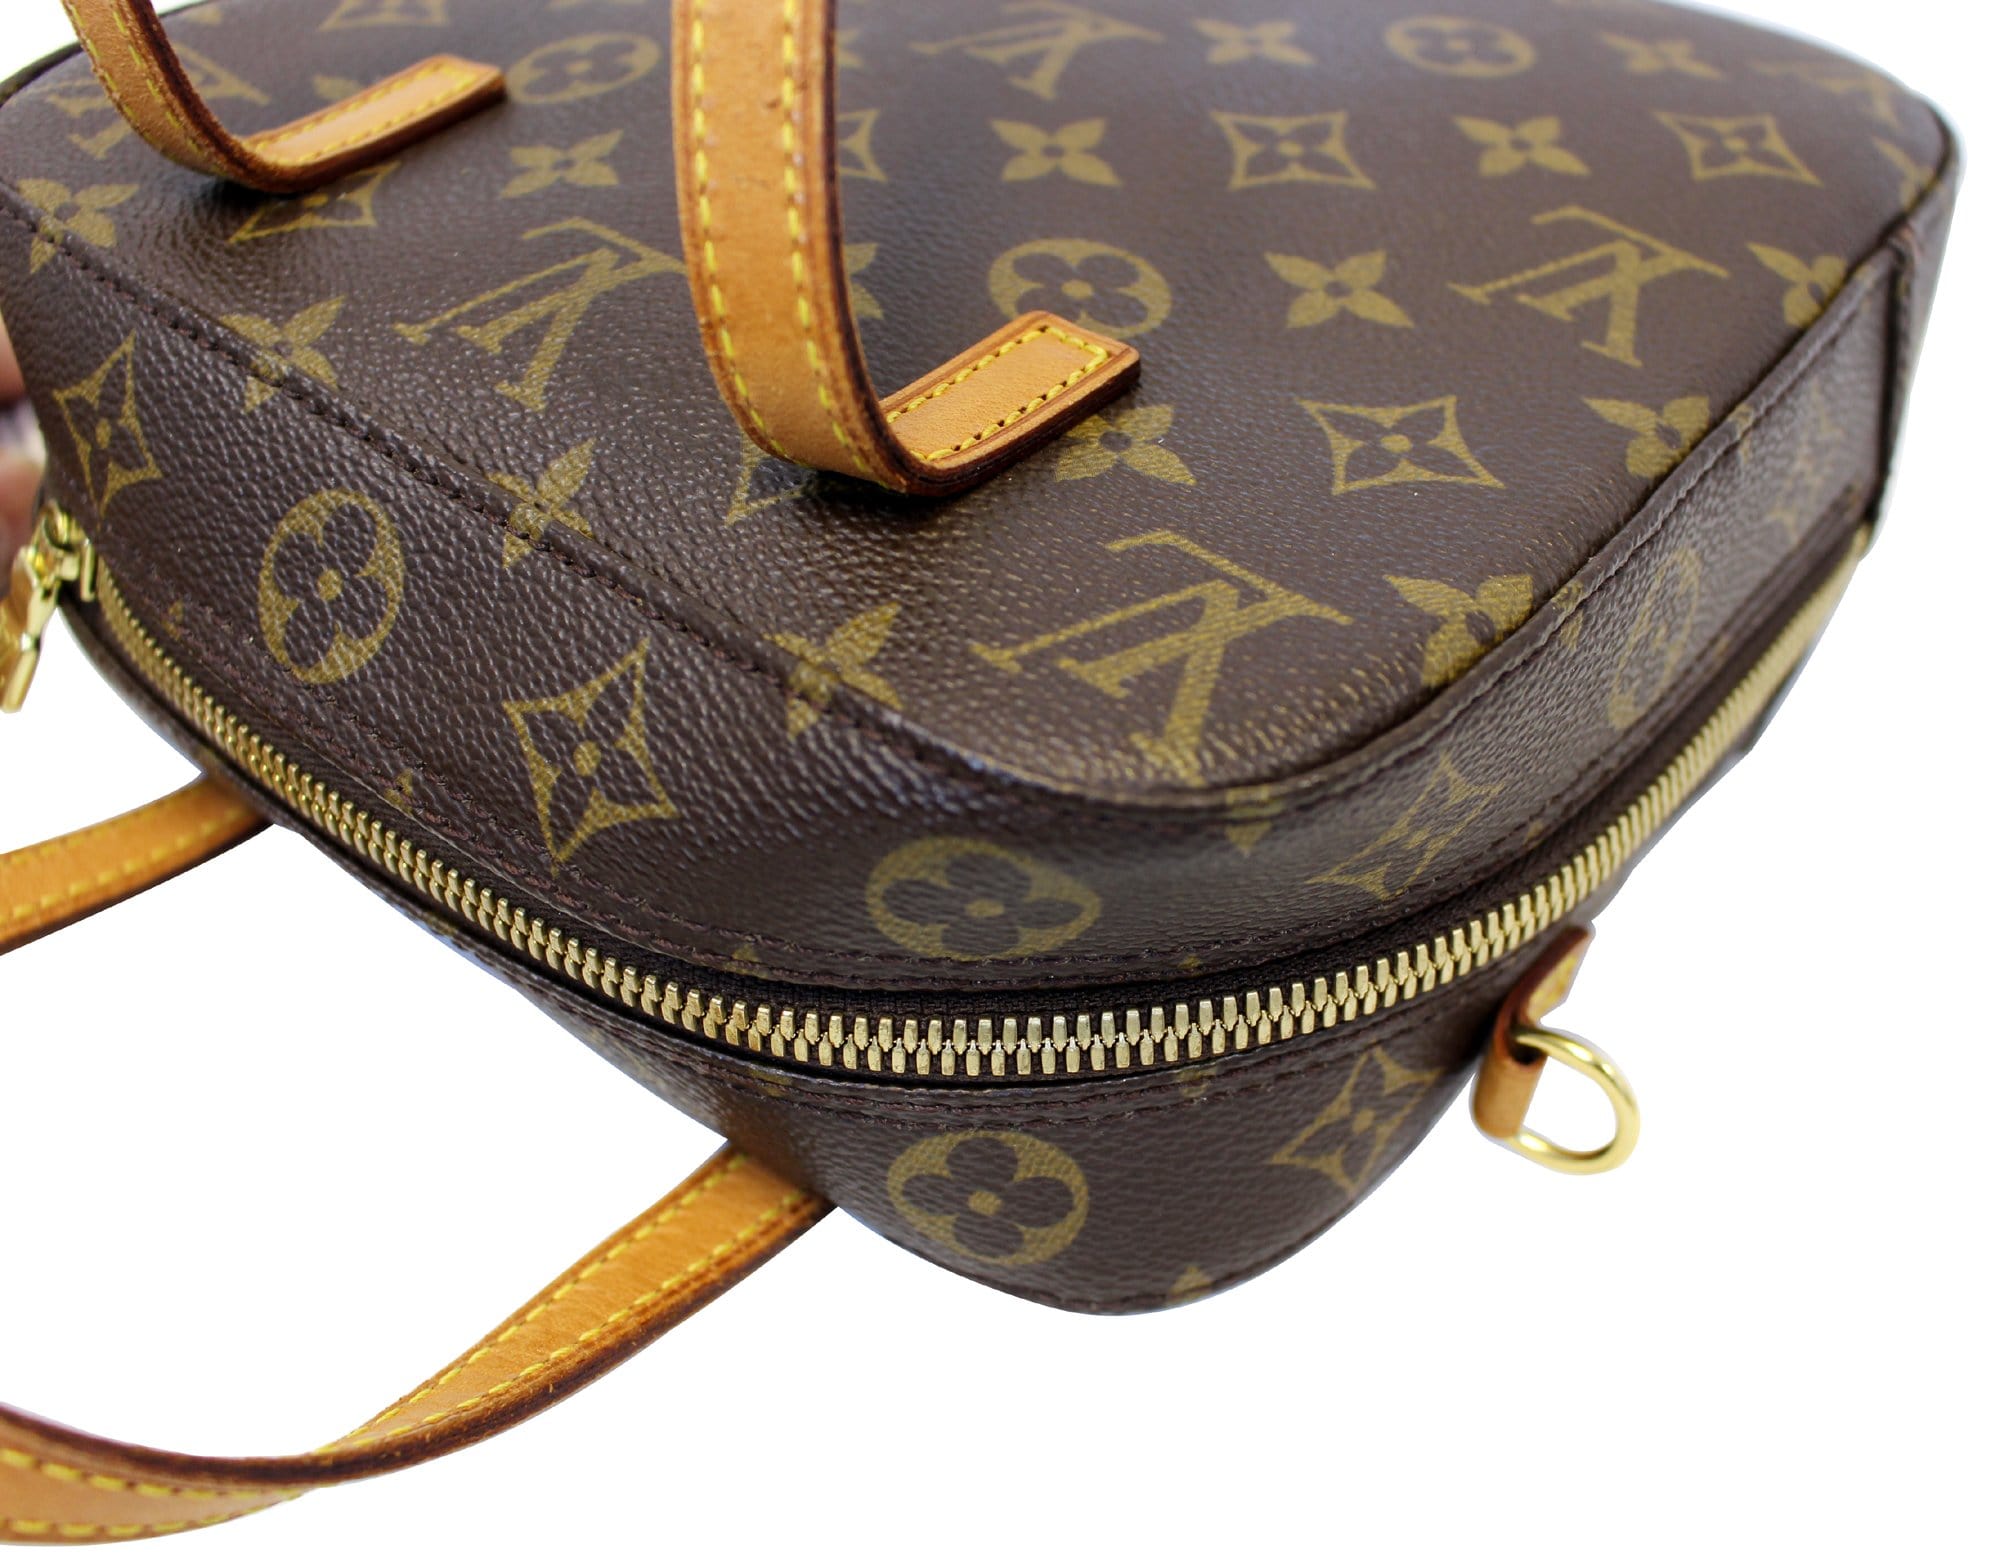 Louis Vuitton Square Handbags